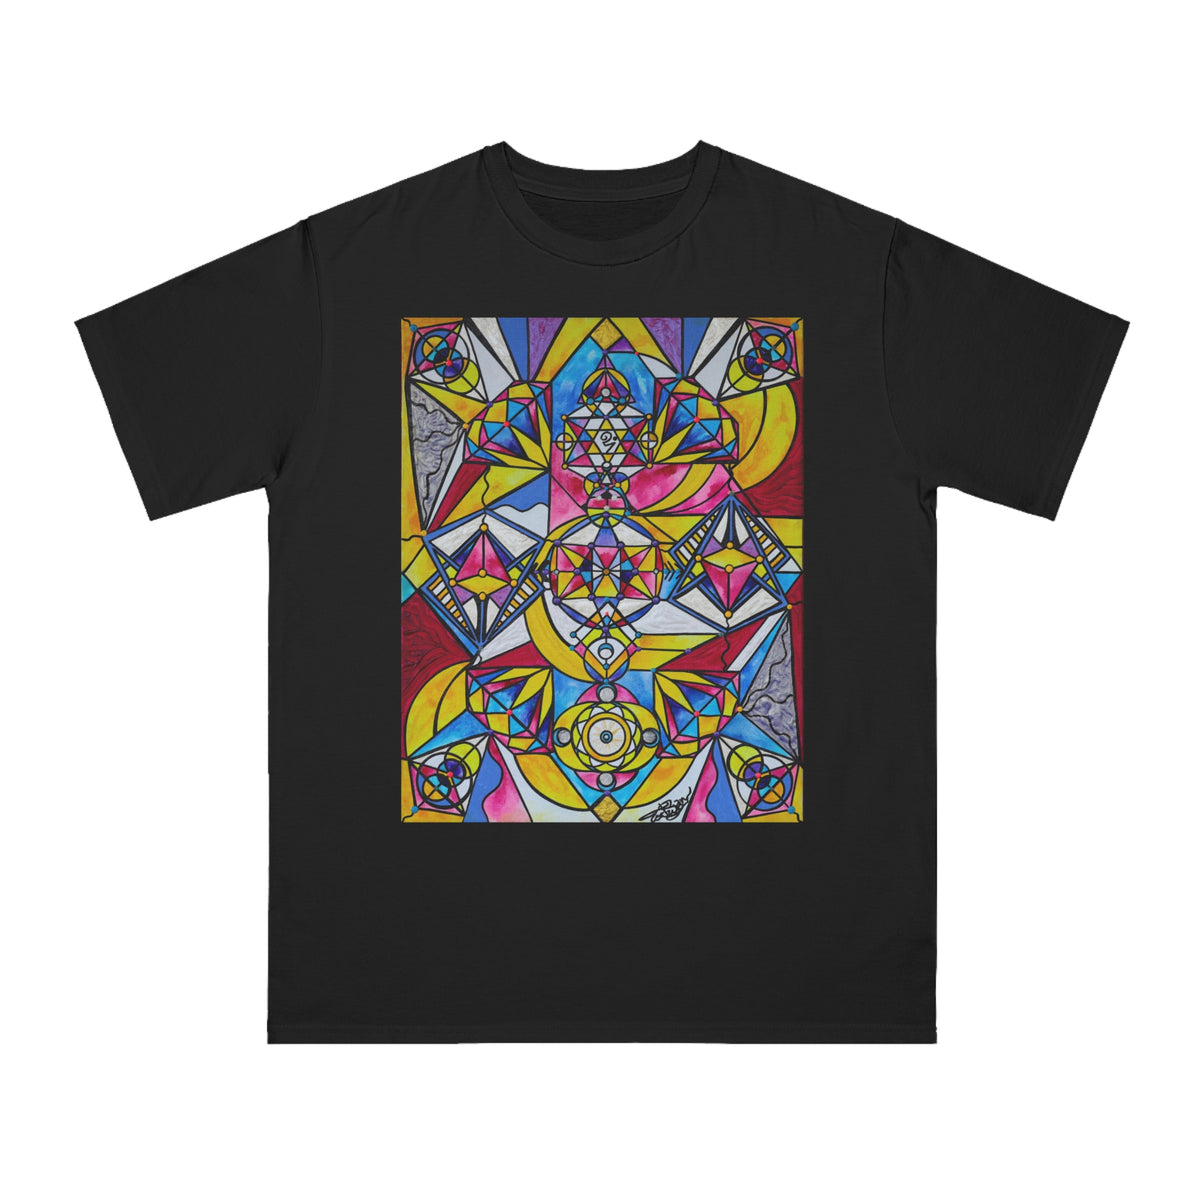 Sanat Kumara Consciousness - Organic Unisex Classic T-Shirt